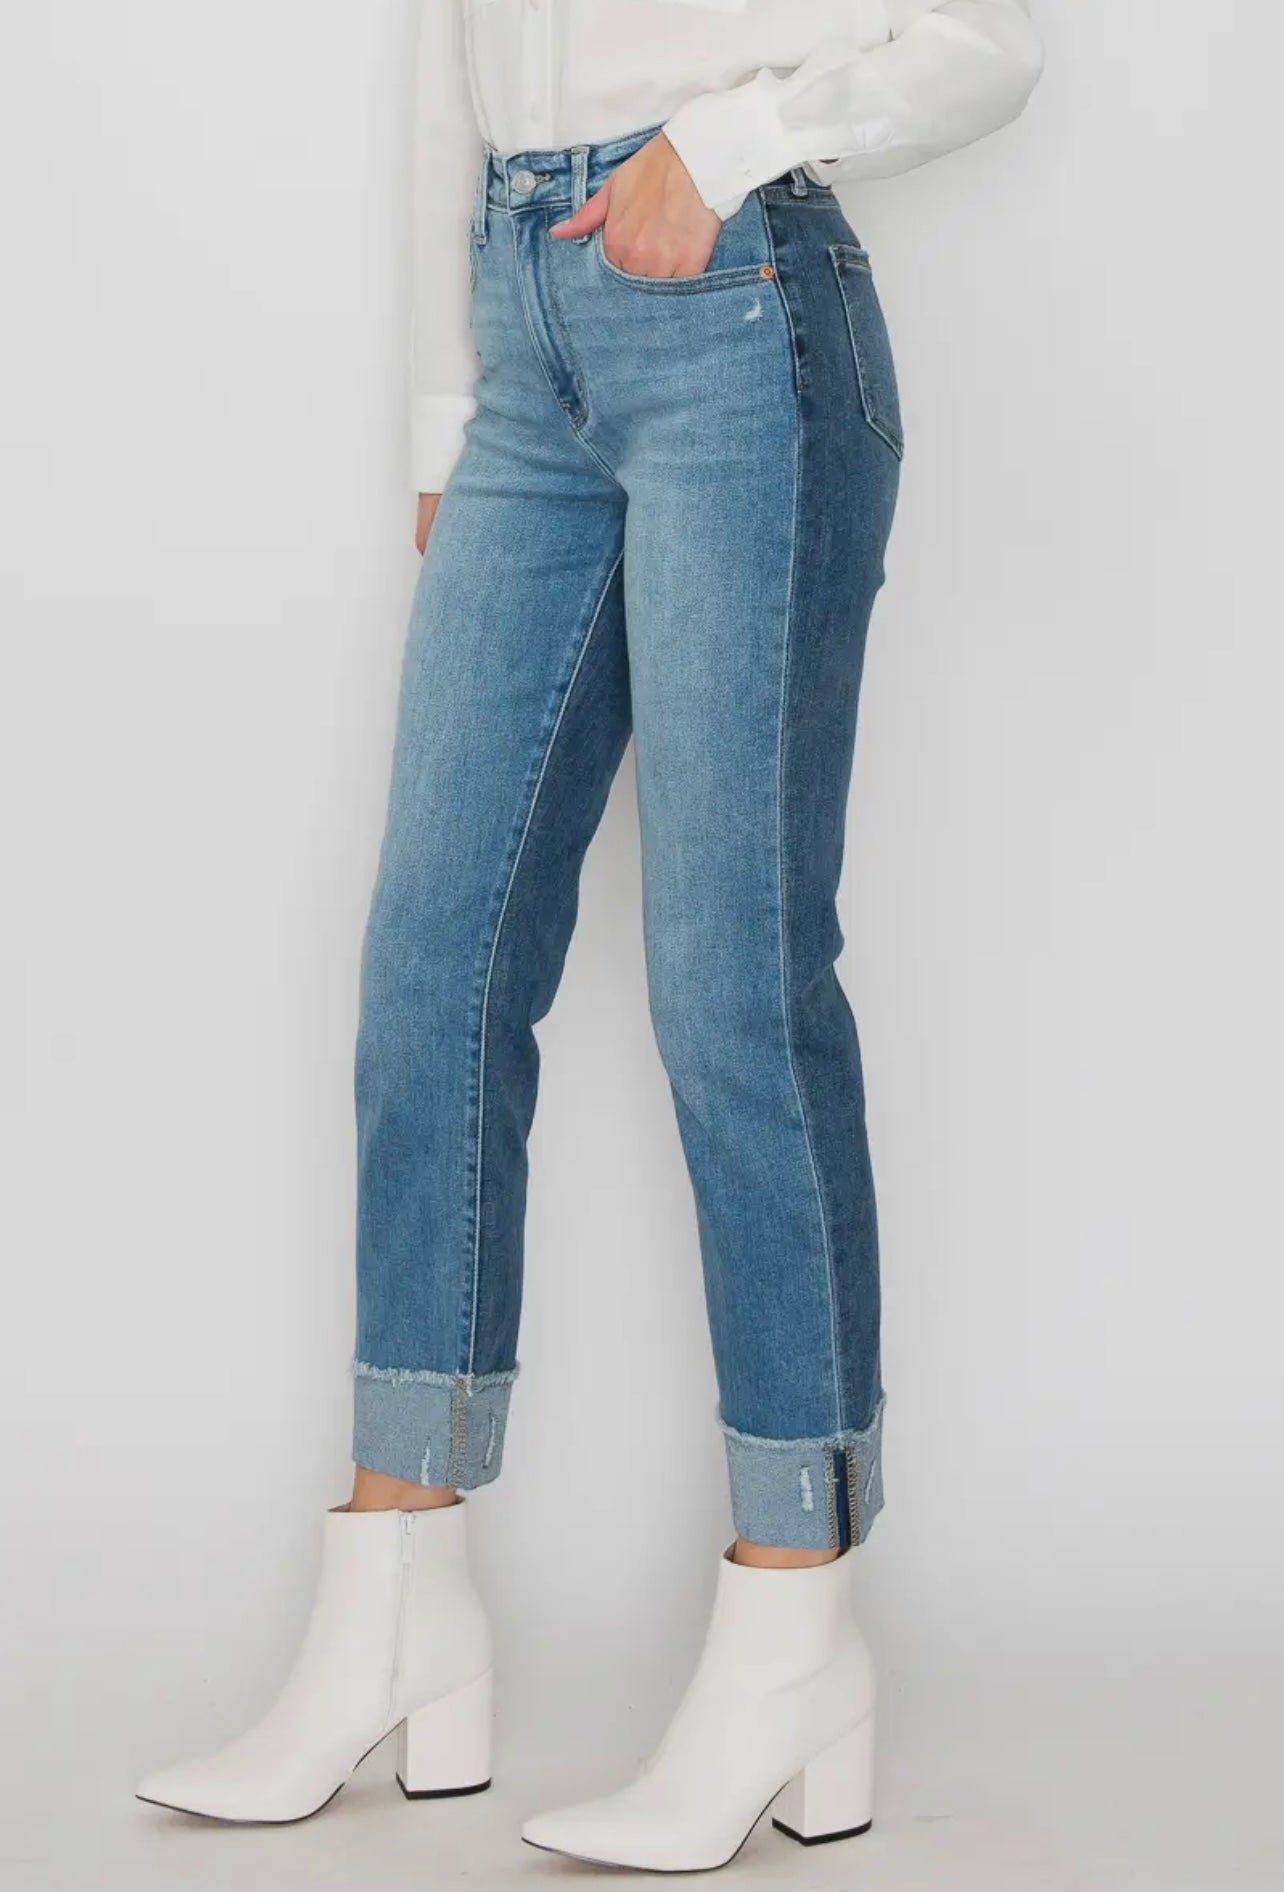 Artemis Vintage High Rise Straight Jeans